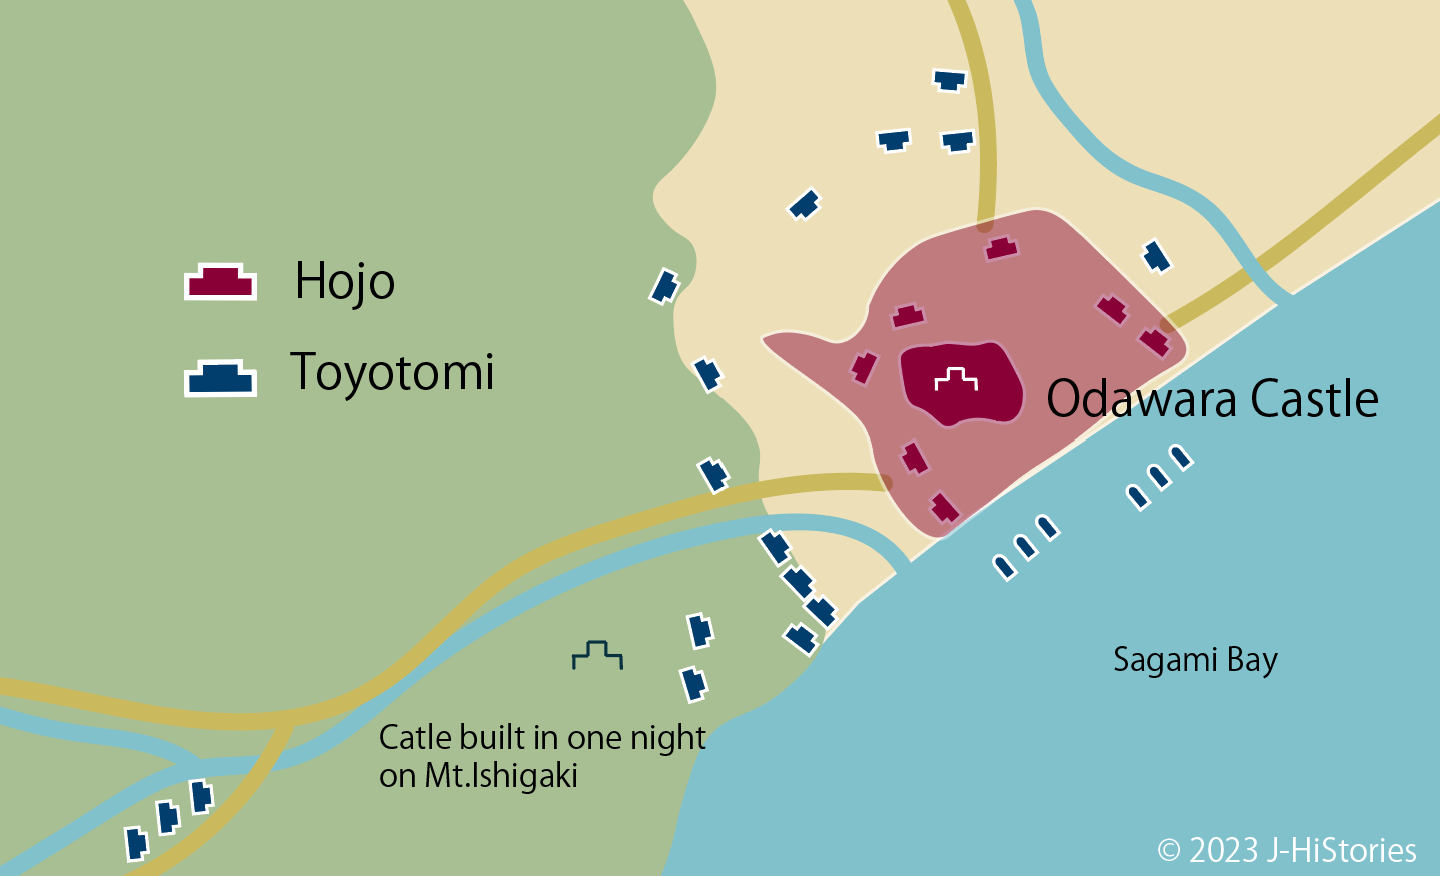 Map of Odawara Battle between Hojo and Toyotaomi clans